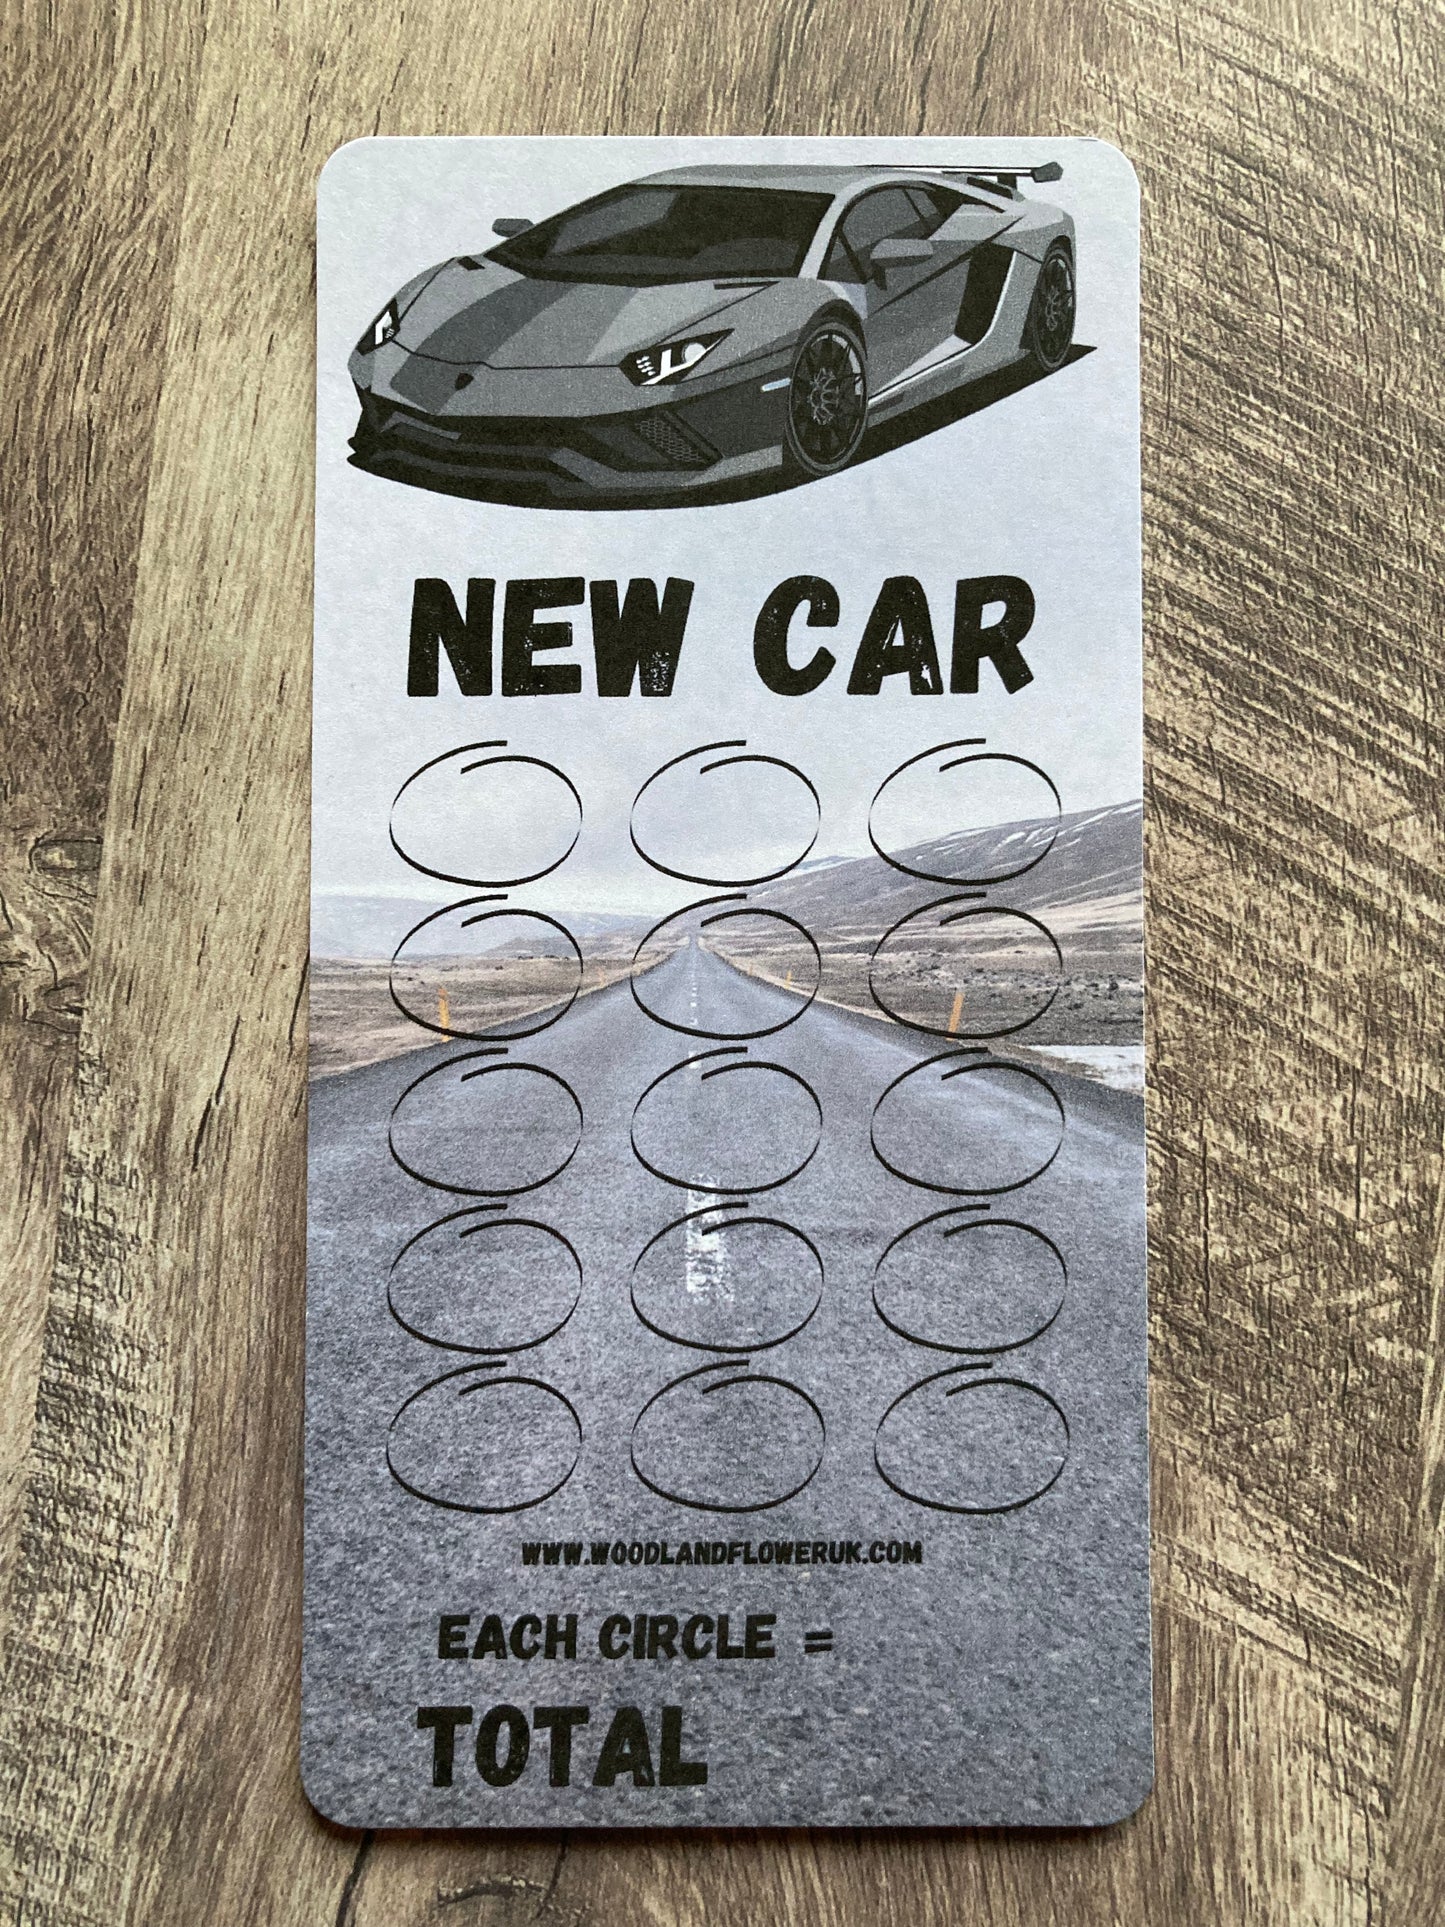 Saving challenge “new car”